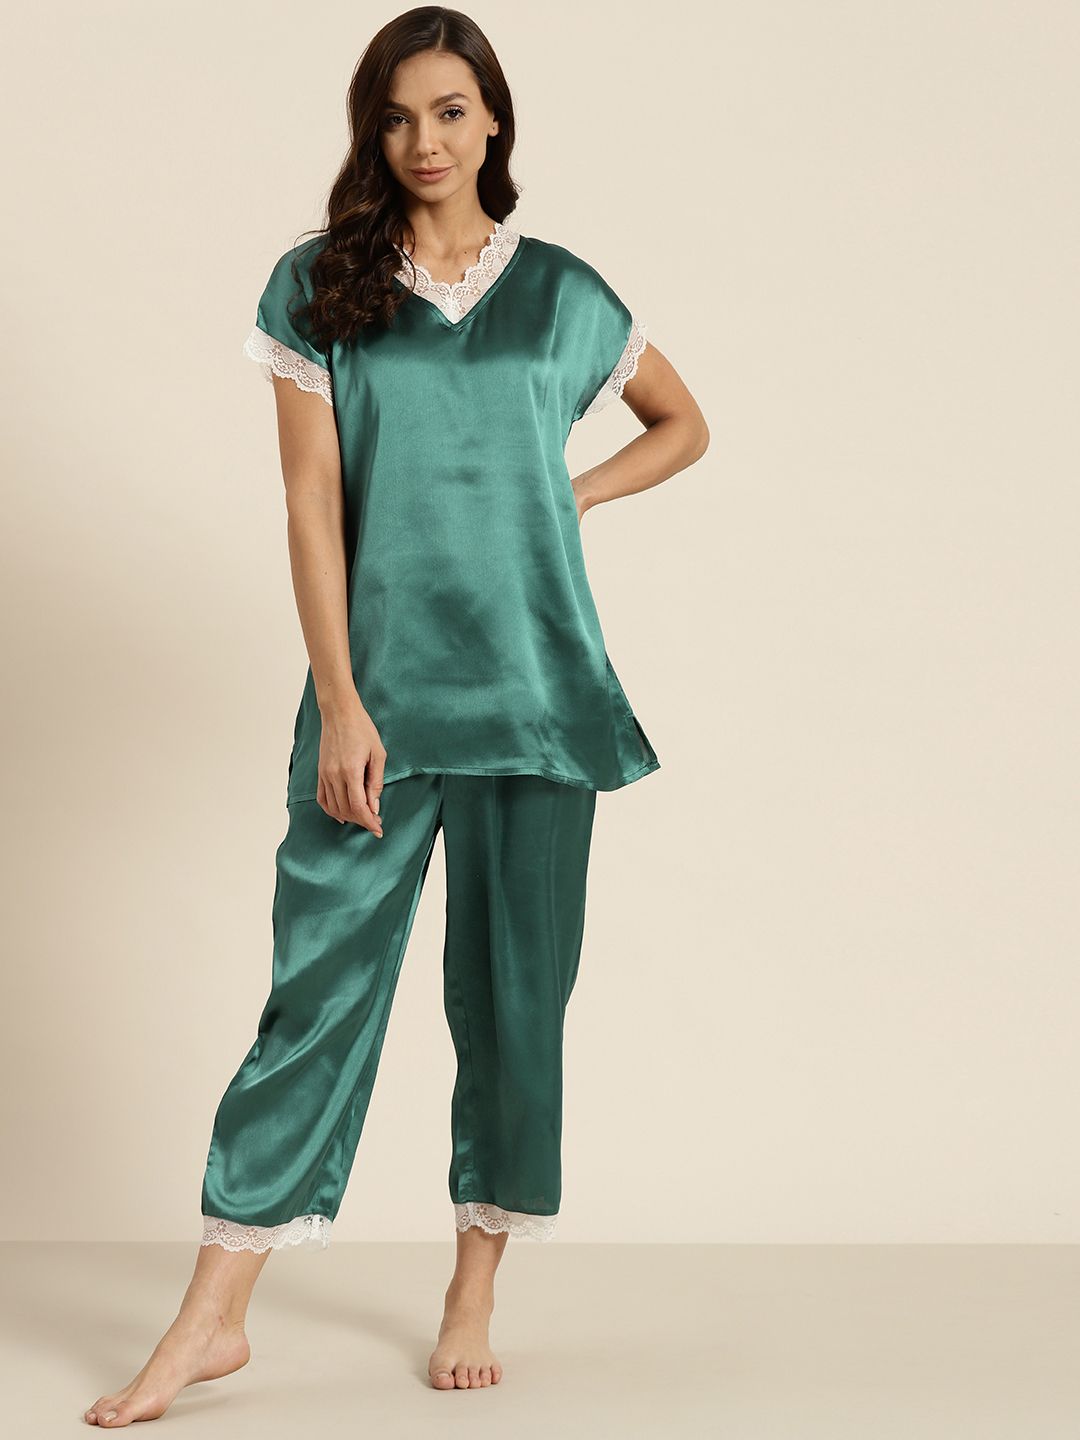 ADORENITE Women Green & White Satin Finish Cropped Pyjamas Set Price in India